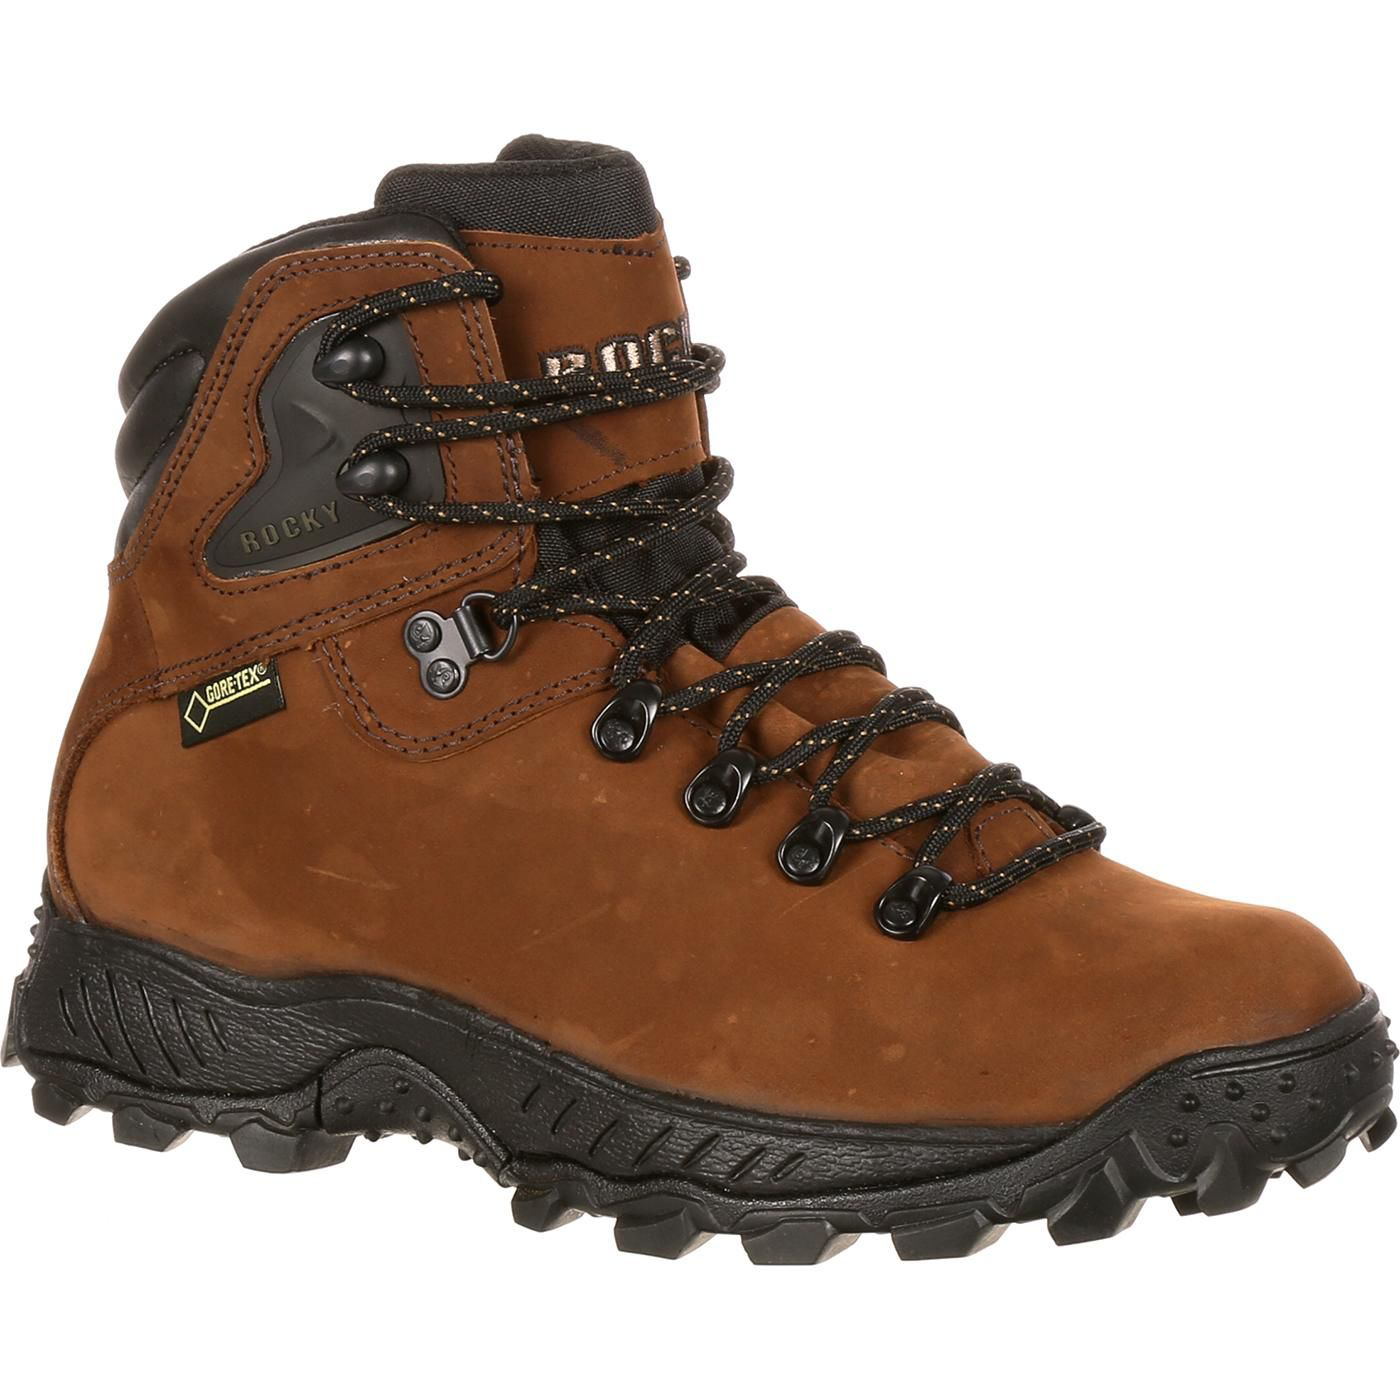 Rocky Ridgetop GORE-TEX 6"" Hiking Boots for Men - Brown - 13W